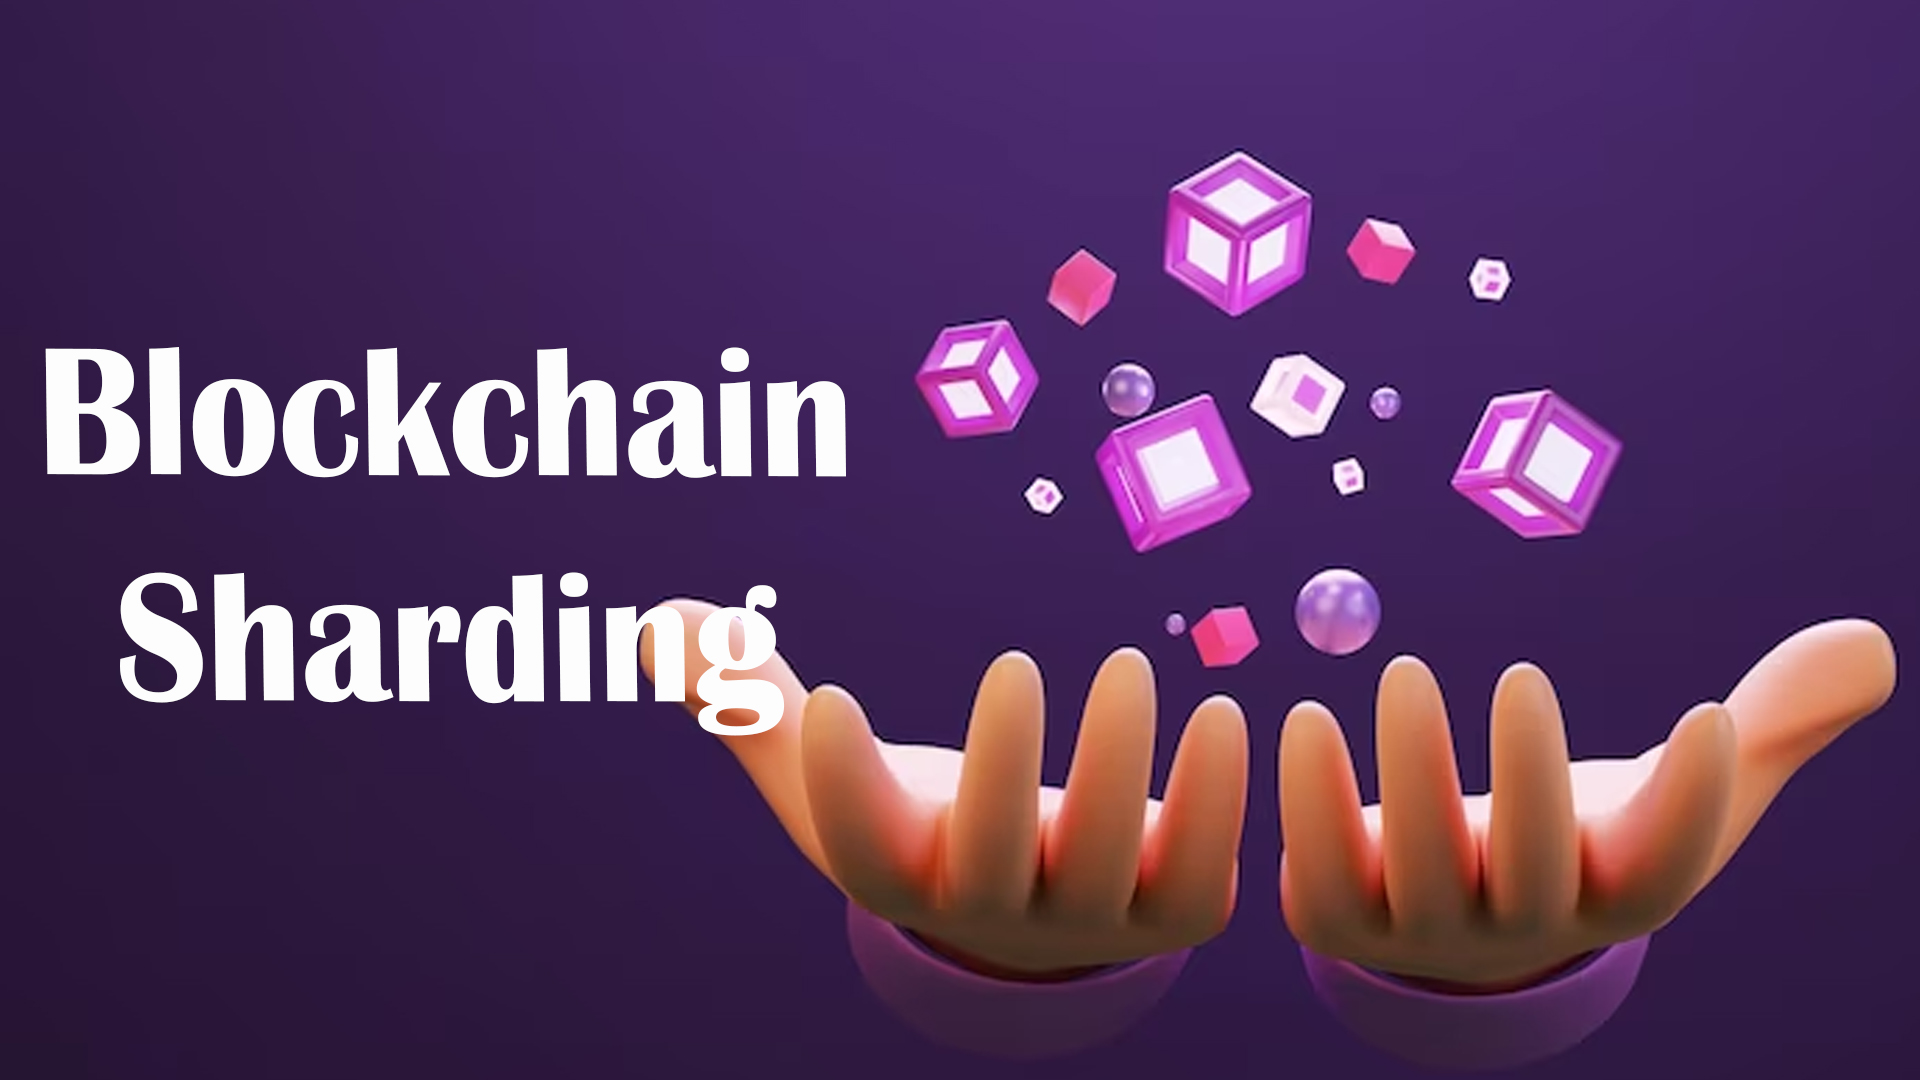 Blockchain sharding